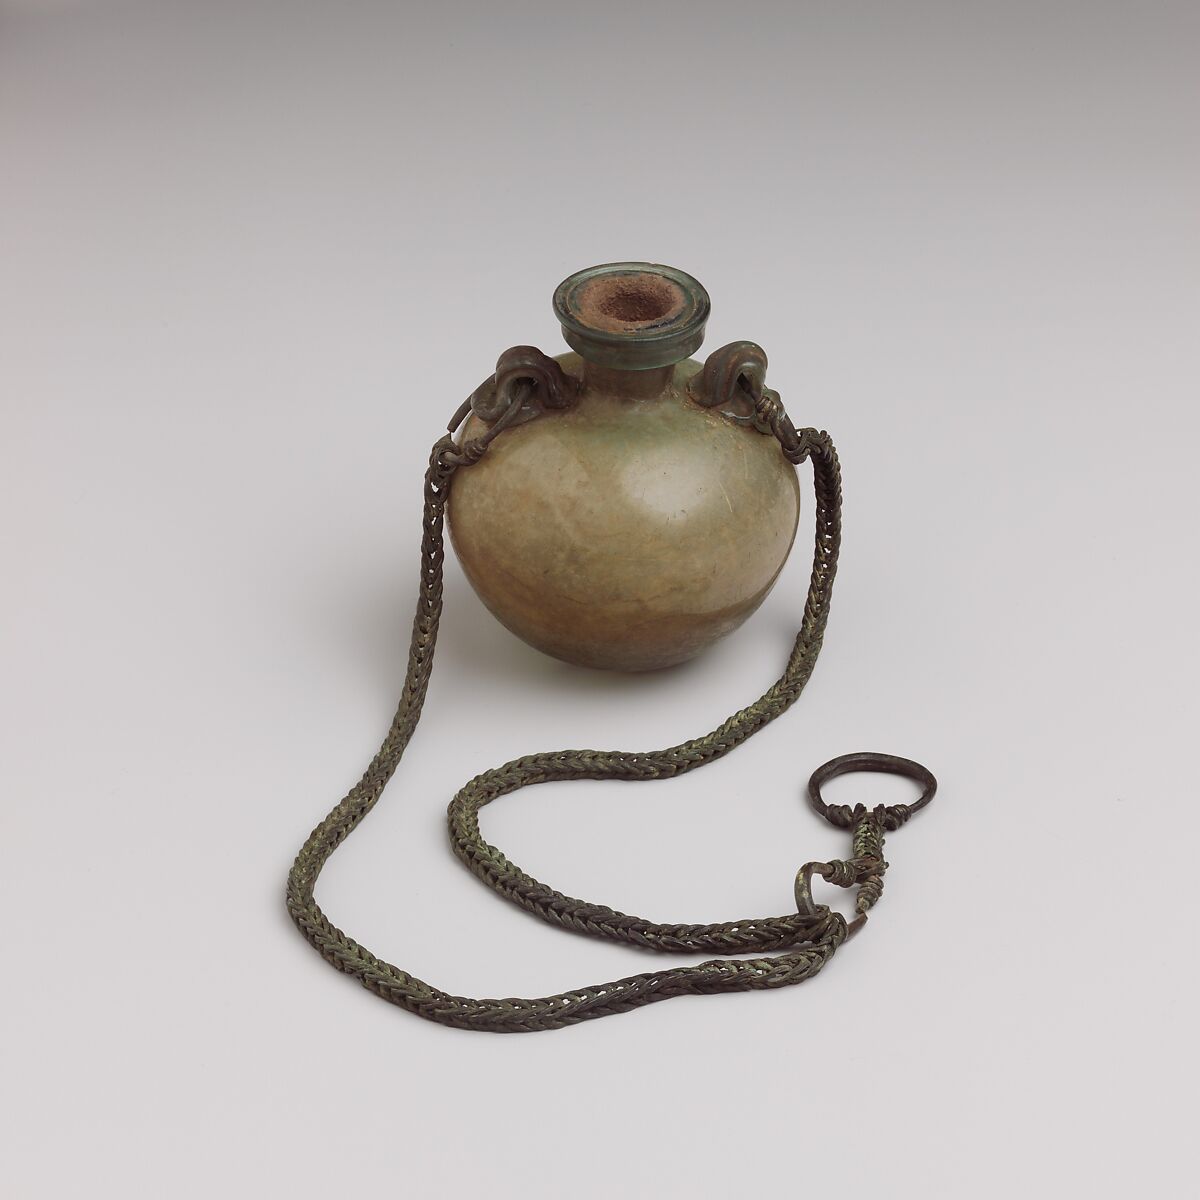 Glass aryballus (oil bottle) with bronze suspension chain, Glass, Bronze, Roman 